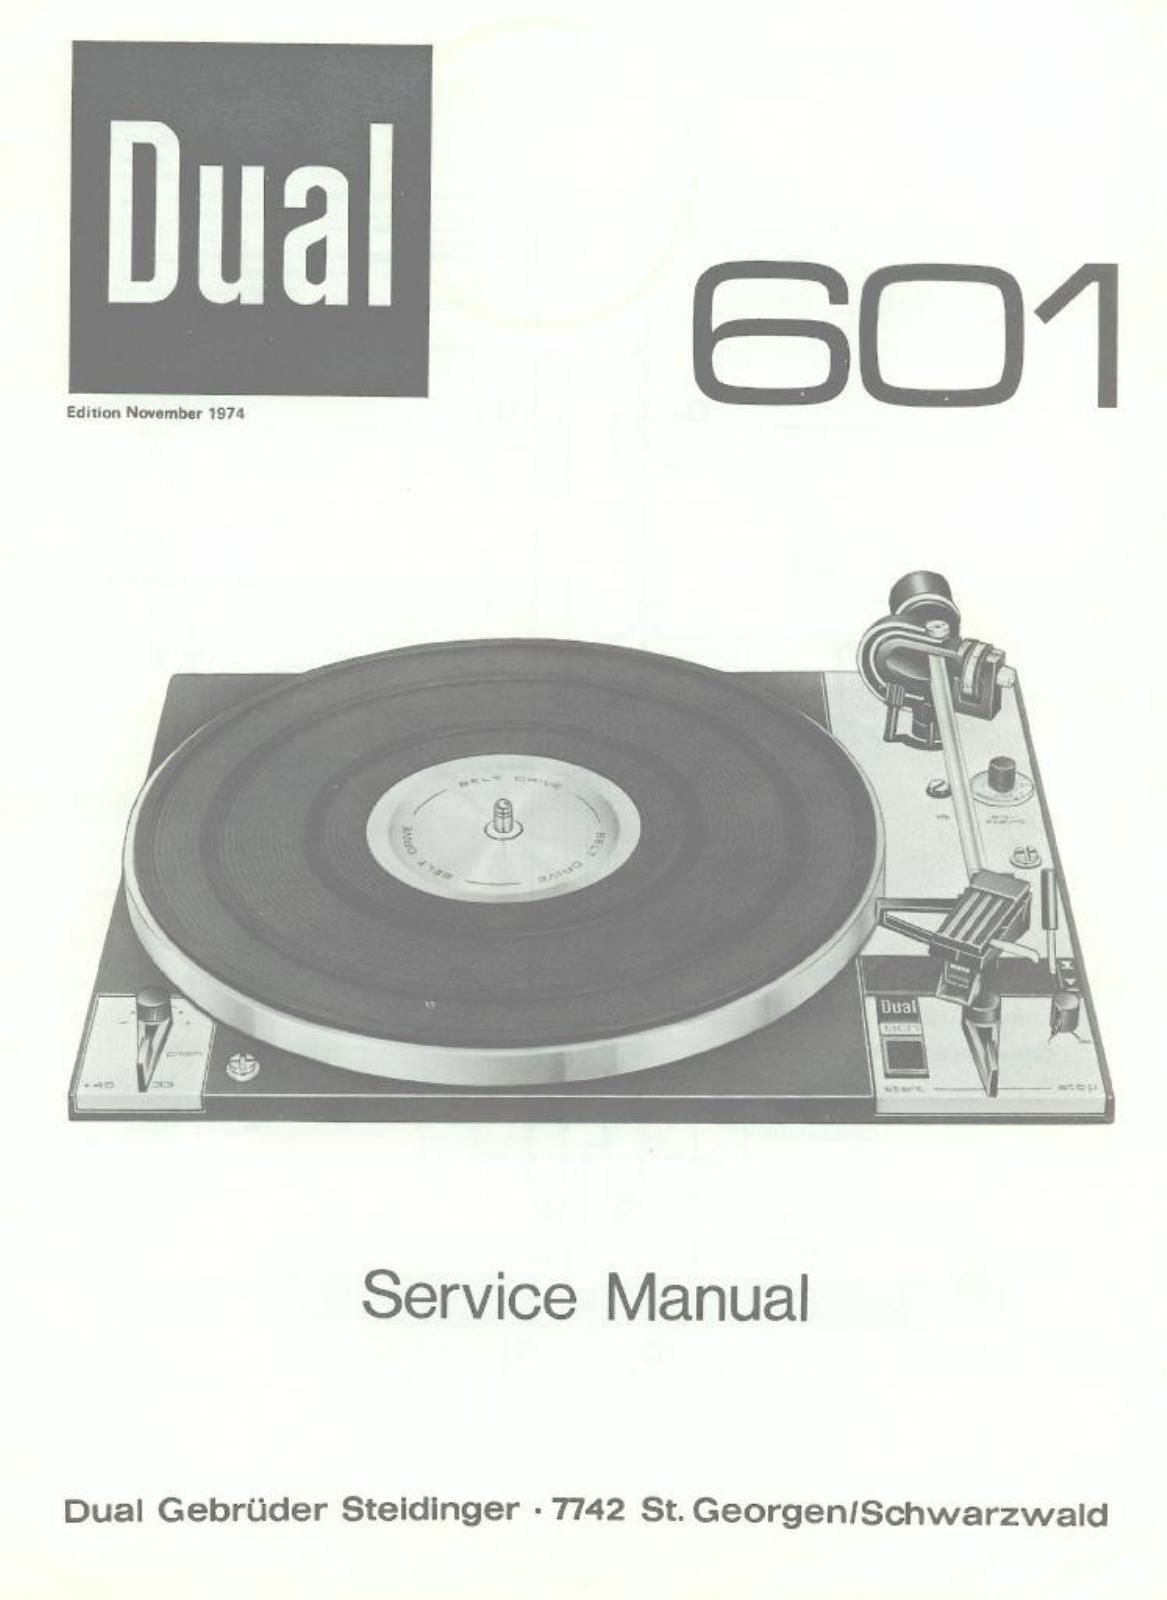 Dual 601 Service Manual